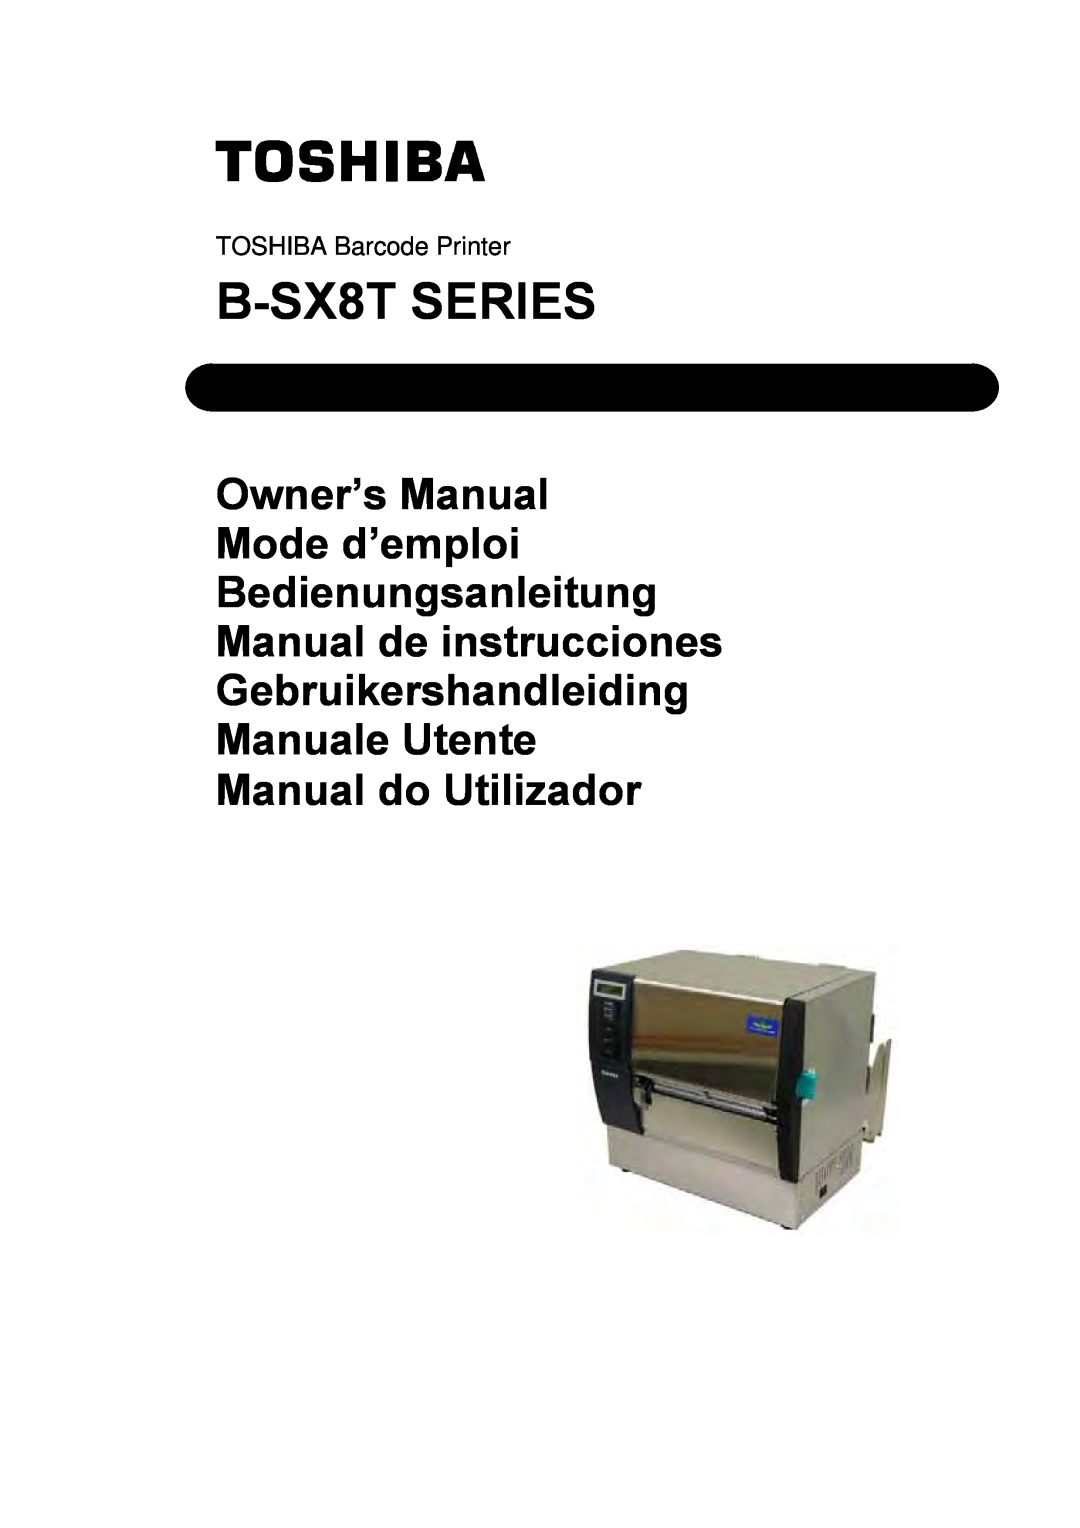 Toshiba B-SX8T SERIES, EO1-33057D owner manual TOSHIBA Barcode Printer 